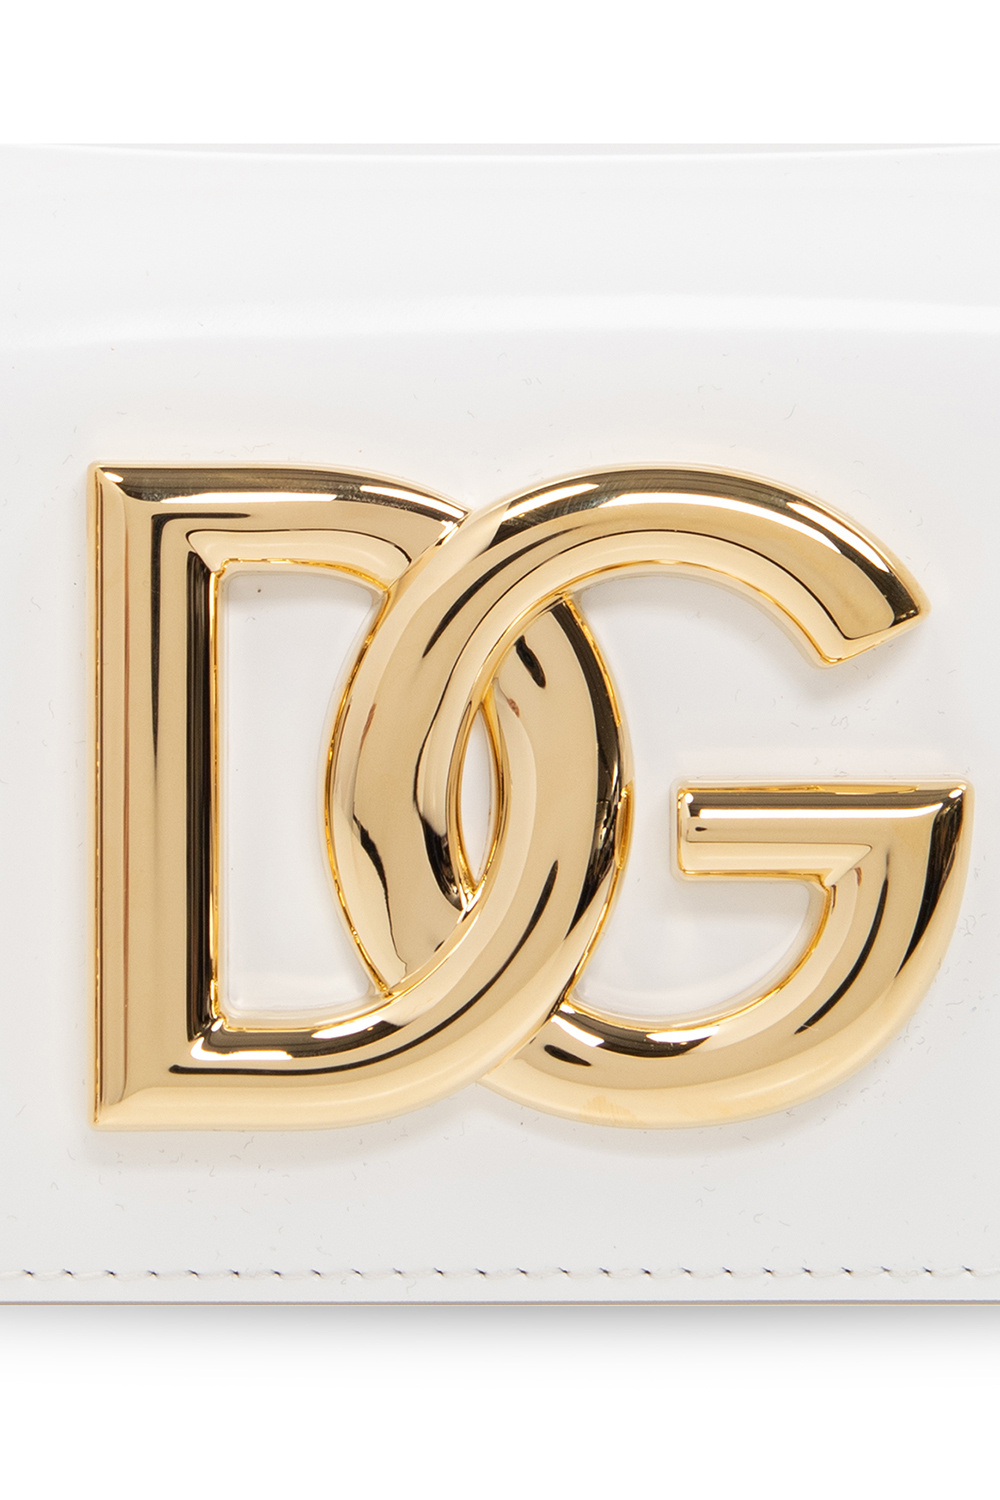 Dolce & Gabbana ‘3.5’ dolce gabbana kids heart strap slip on sneakers item